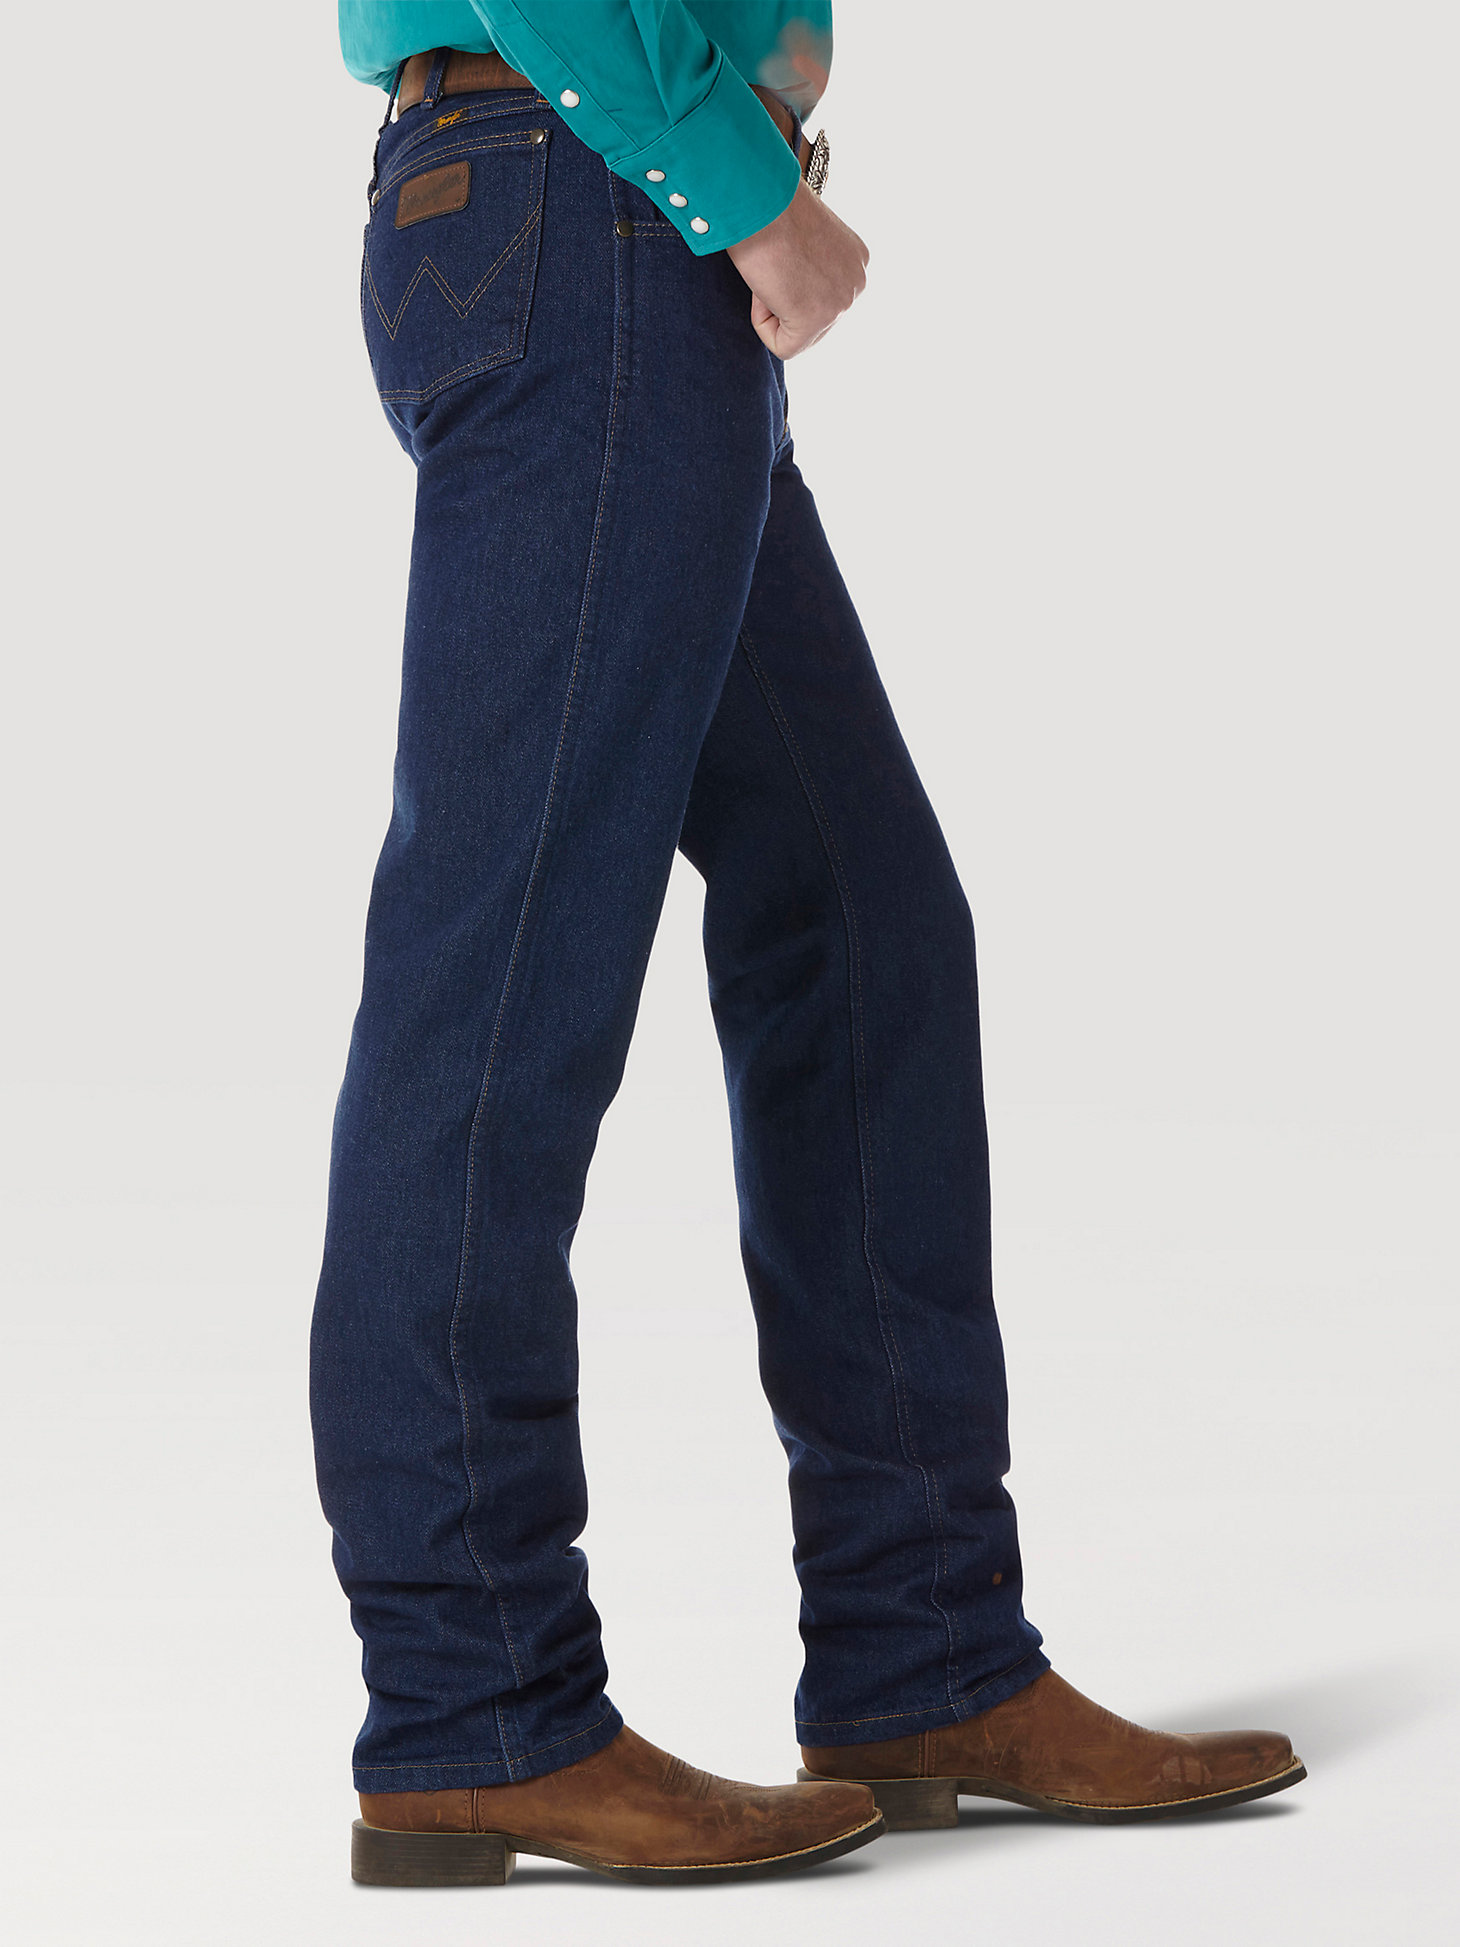 Men's Wrangler Cowboy Boot Cut Regular Fit Performance Jeans 47MWZPW Size 36-37 